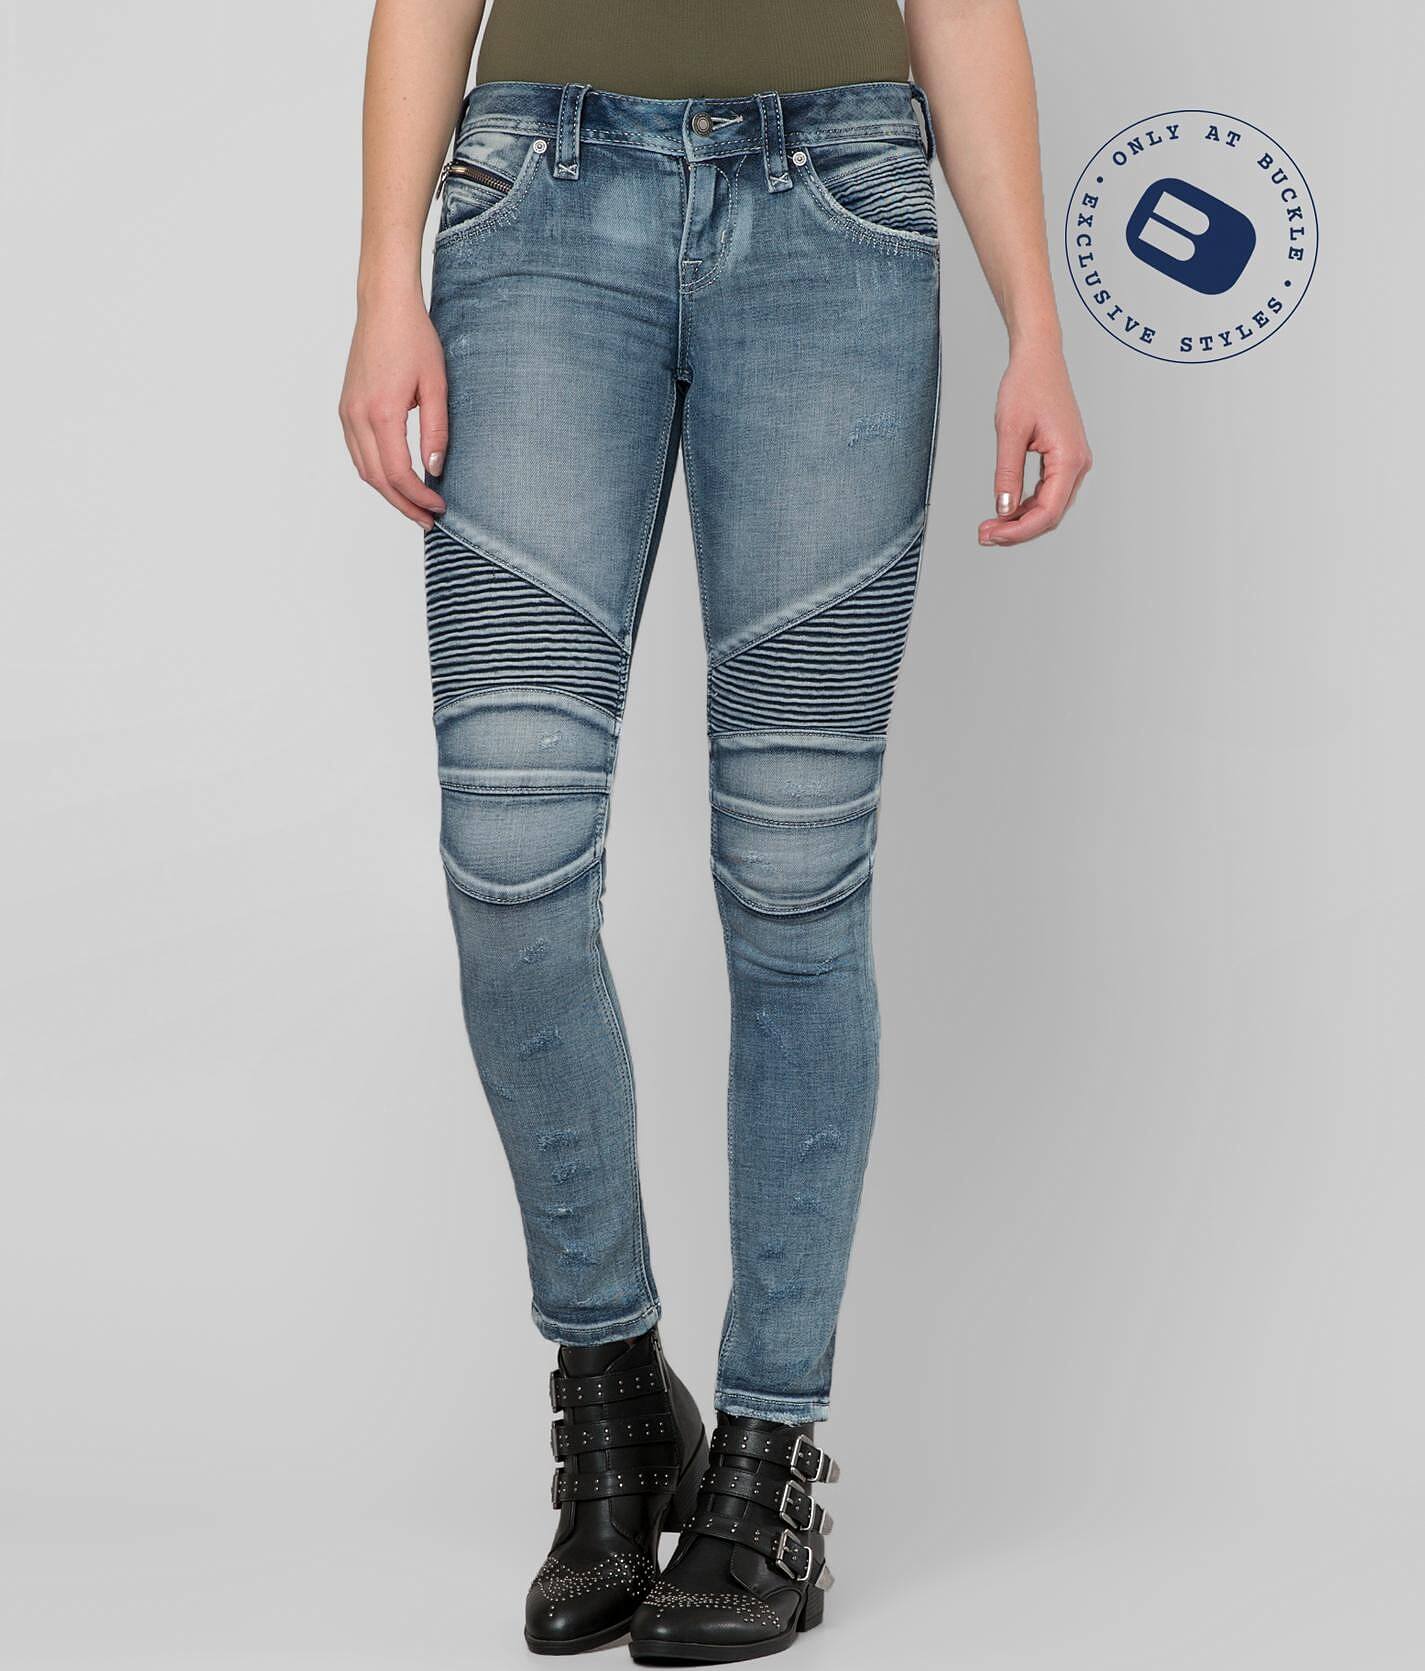 quiksilver jeans regular fit